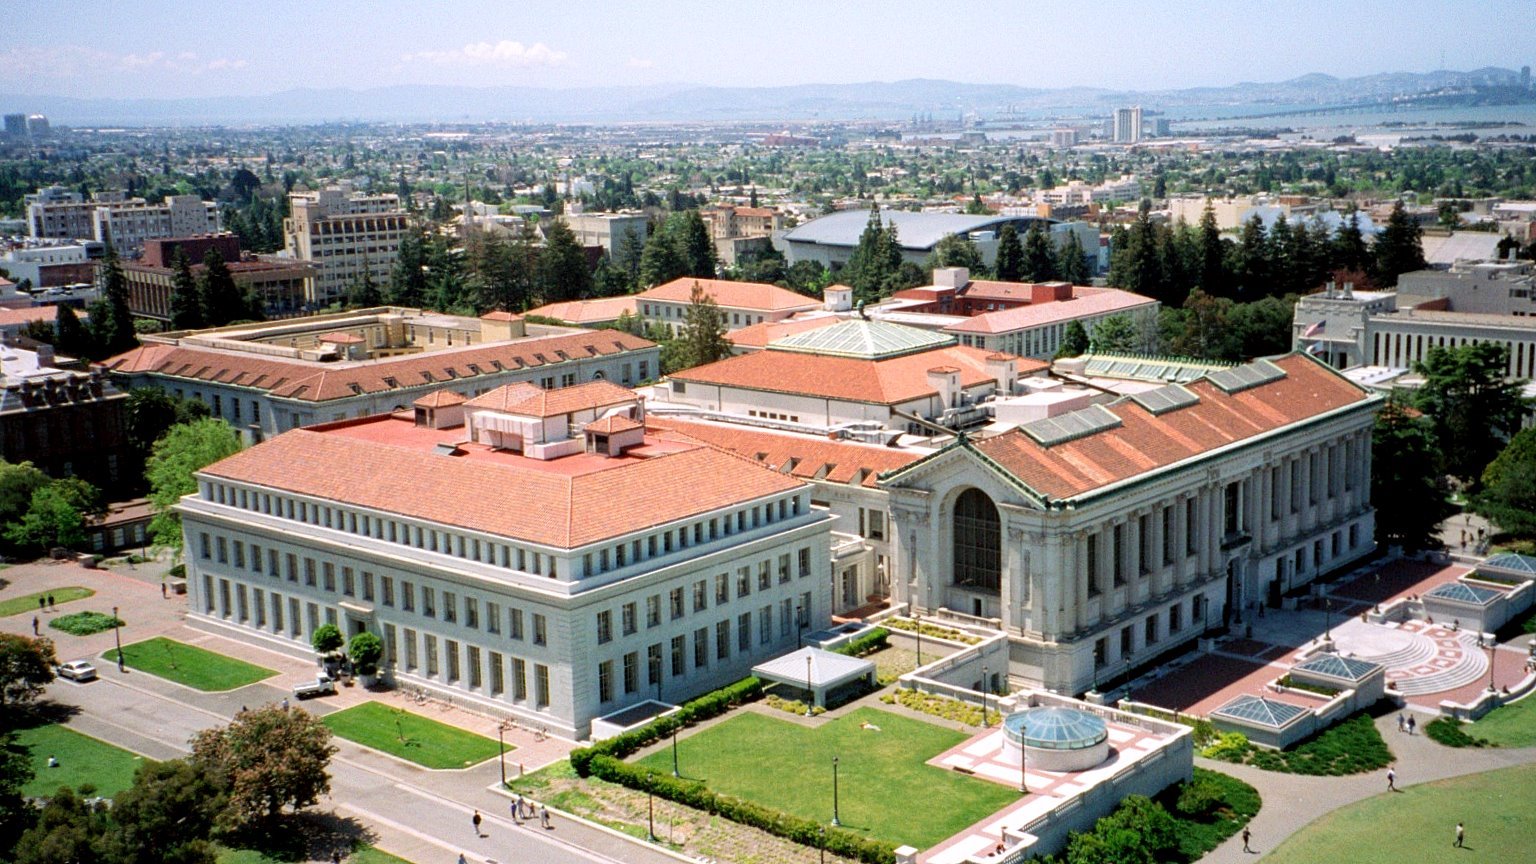 university of california berkeley travel expenses